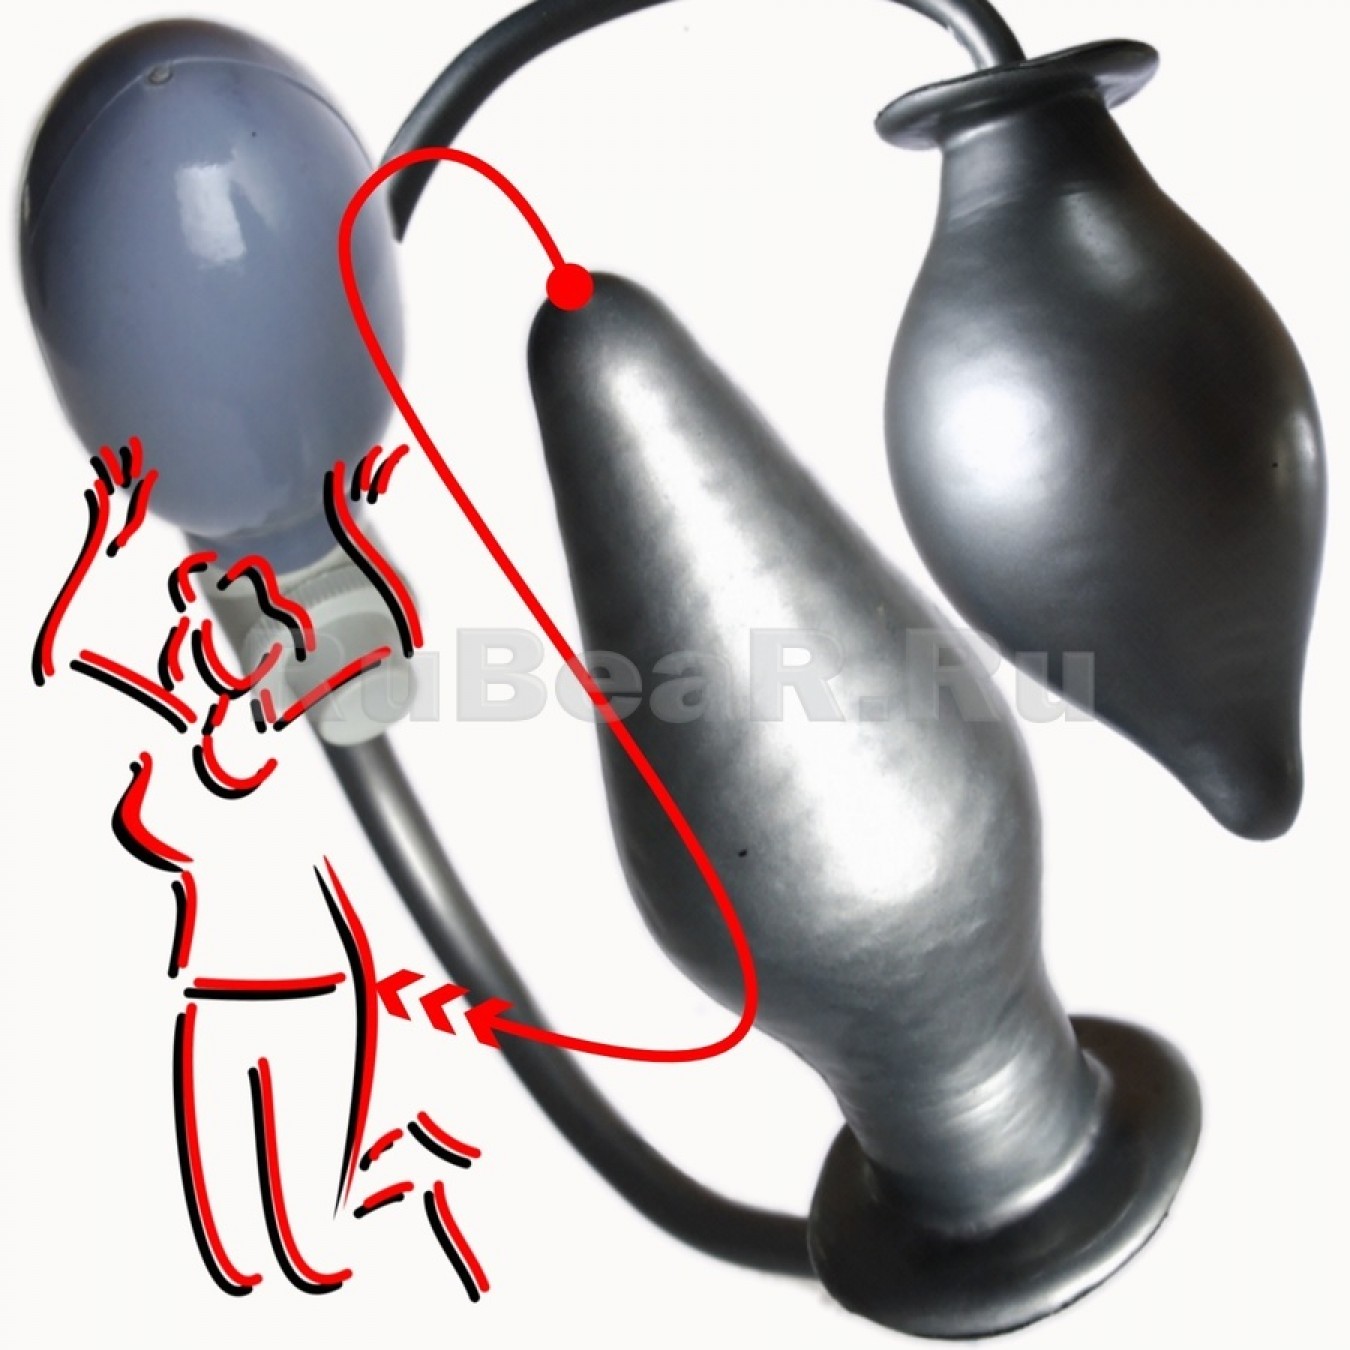 IL4105 Inflatable anal plug